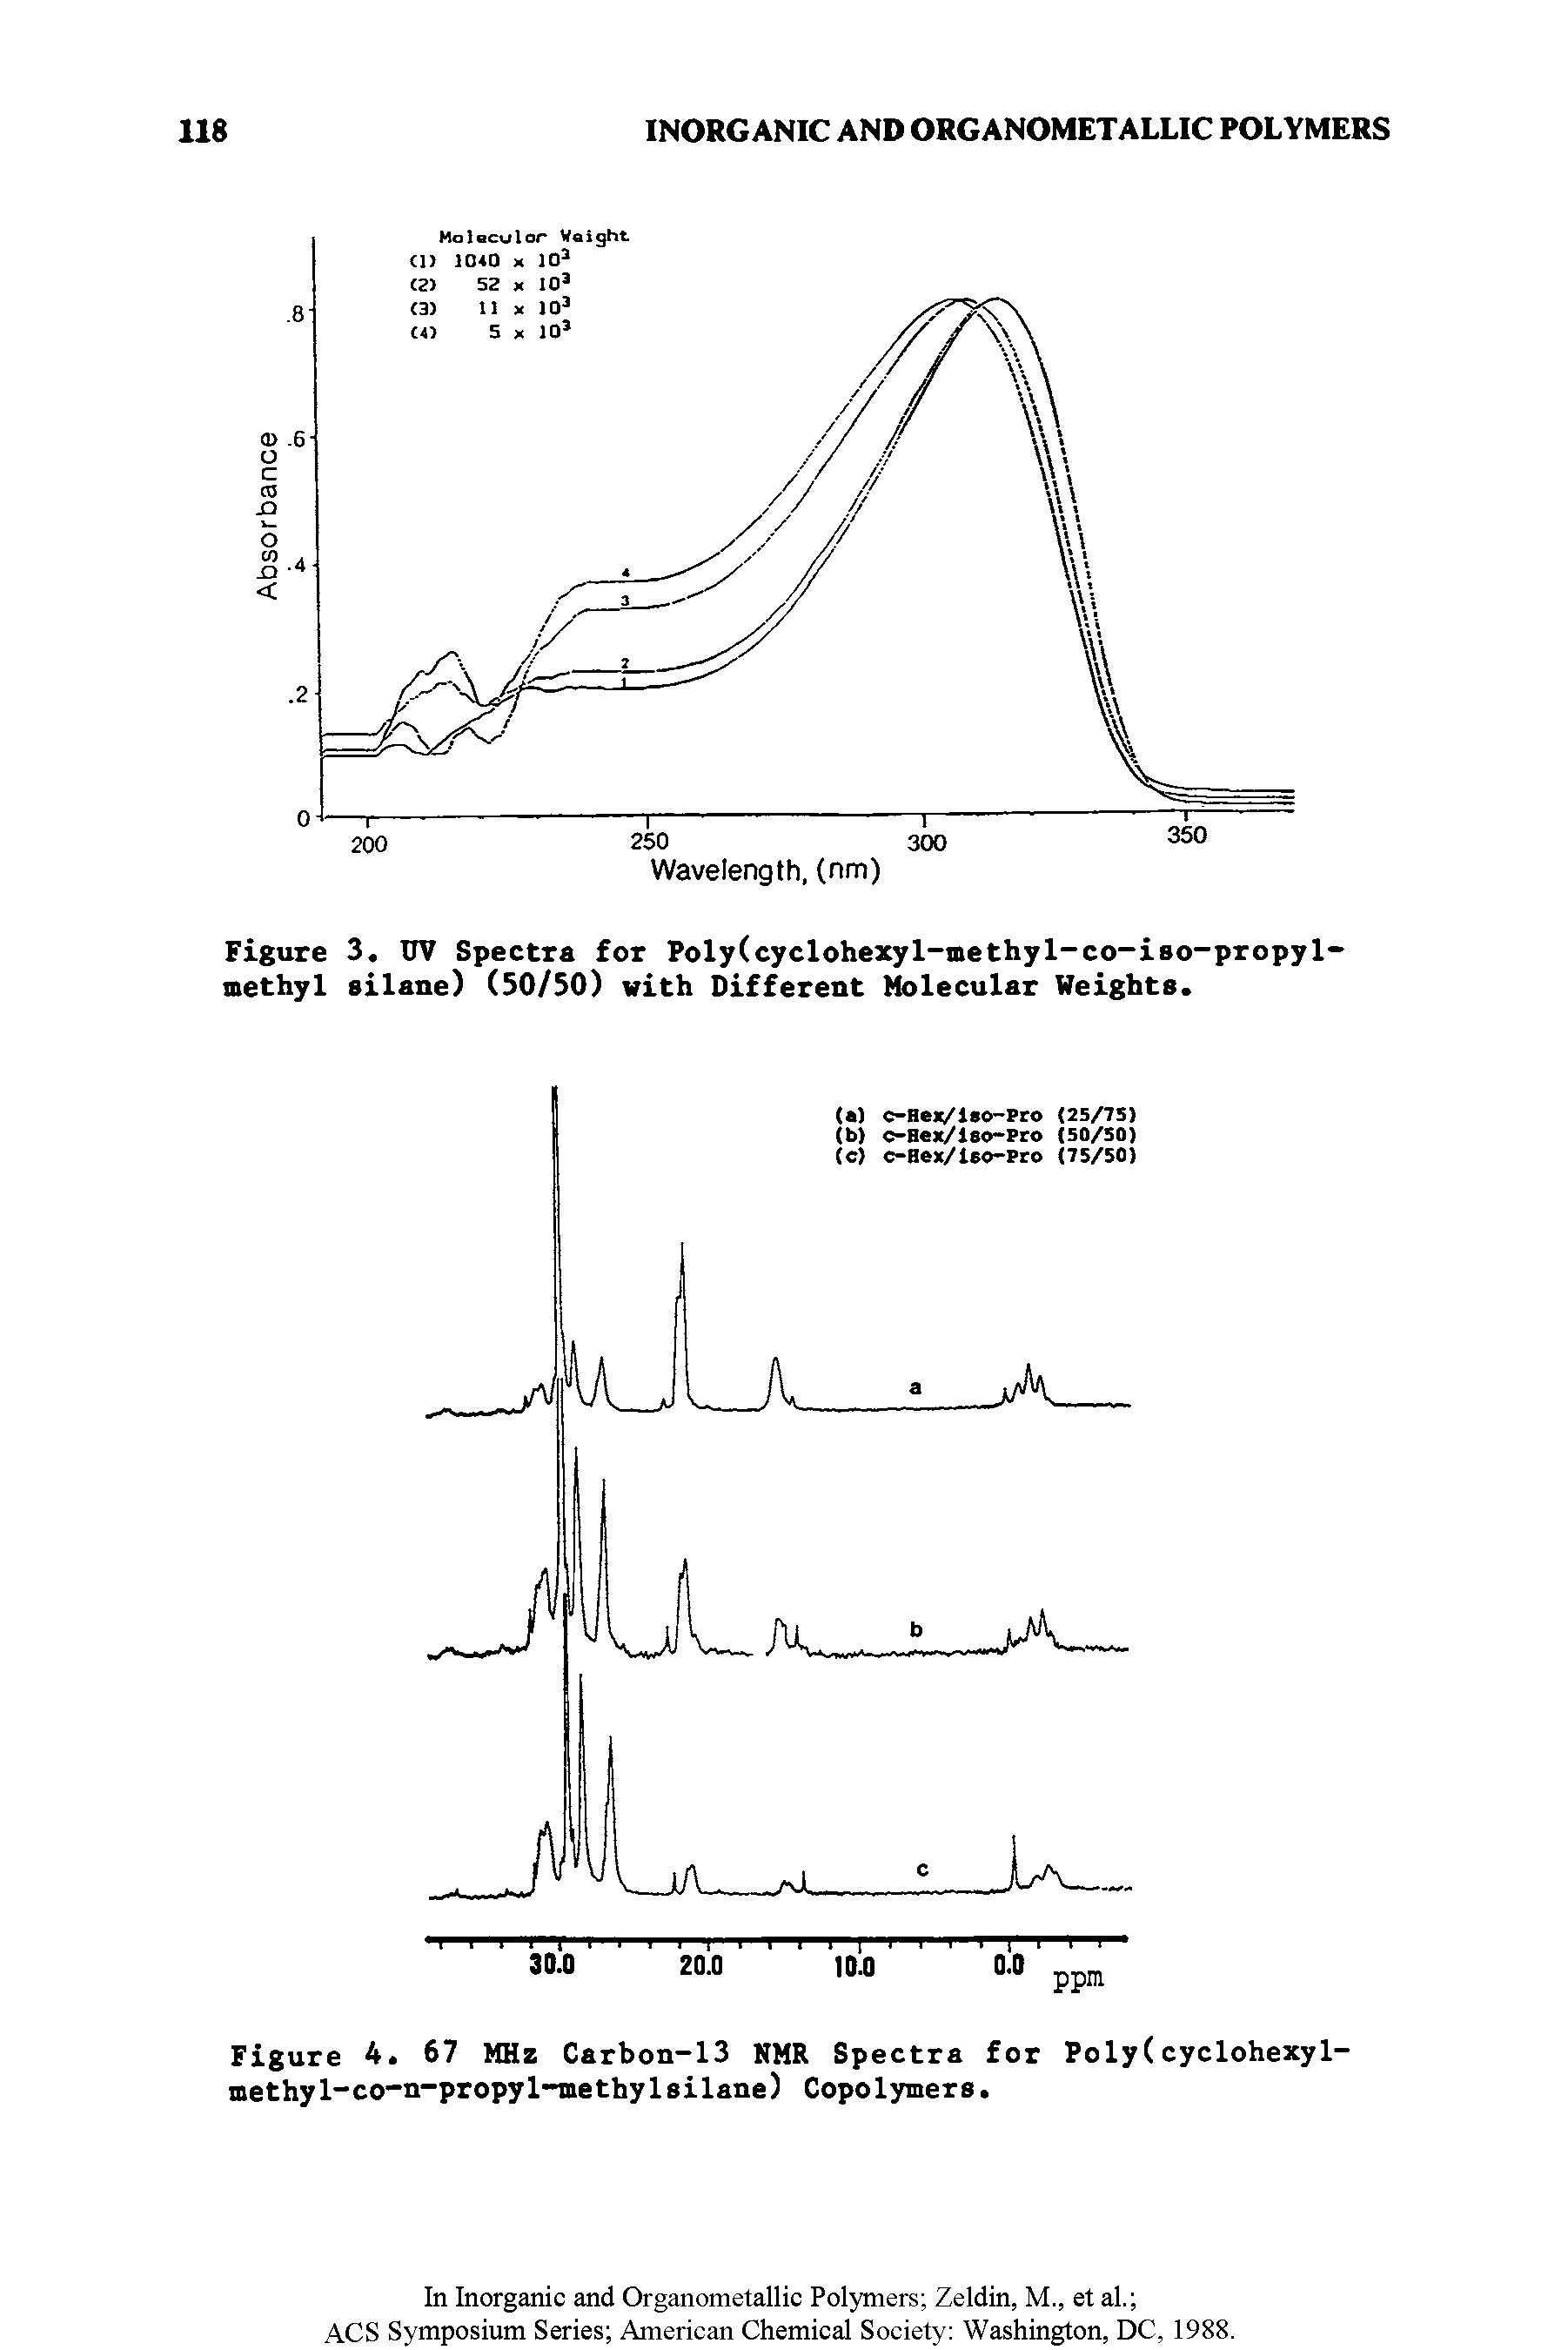 Figure 4. 67 MHz Carbon-13 NMR Spectra for PolyCcyclohexyl-methyl-co-n-propy1-methylsilane) Copolymers.